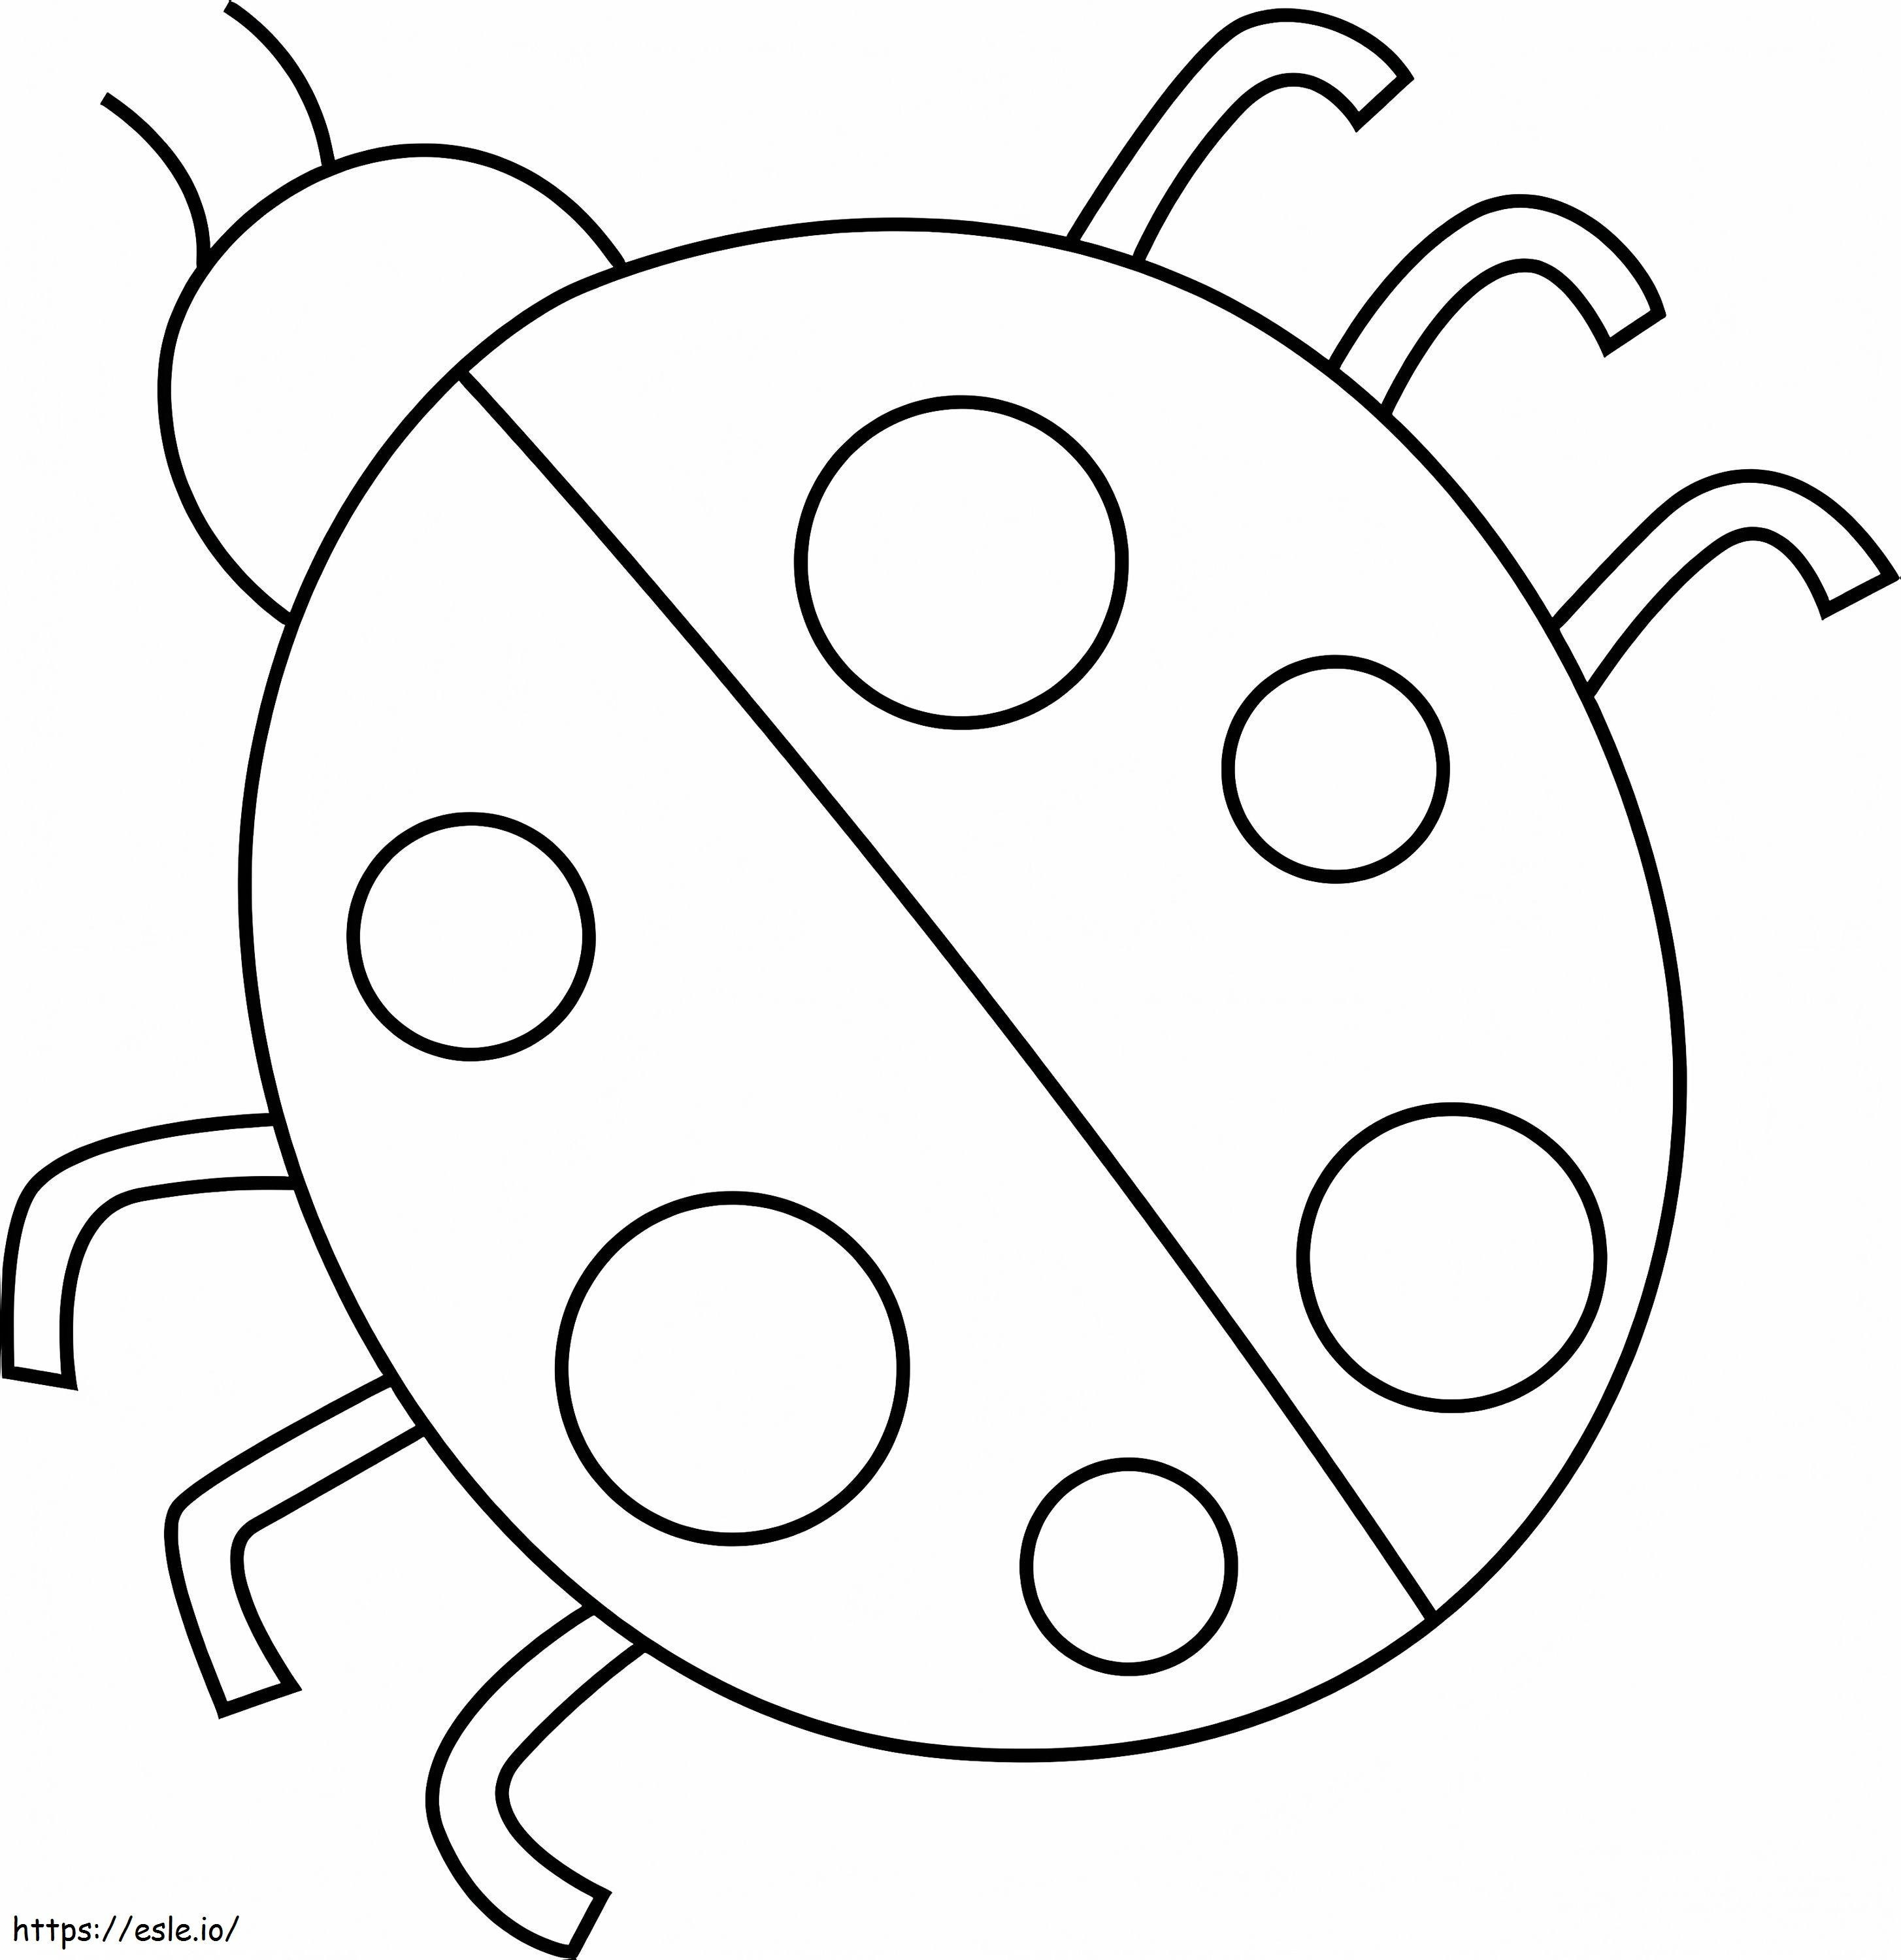 Easy Ladybug coloring page